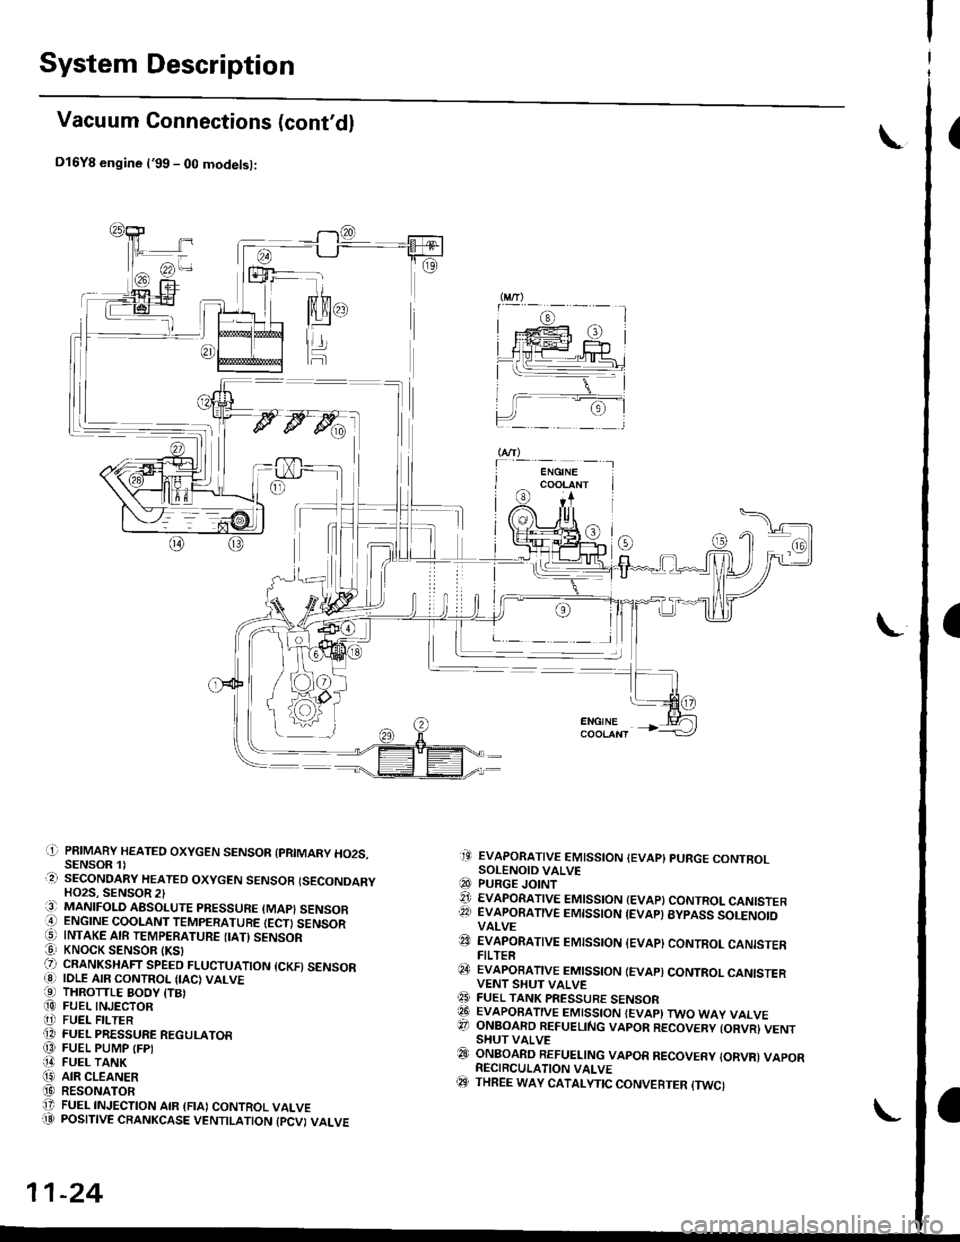 HONDA CIVIC 1997 6.G Owners Manual System Description
Vacuum Connections (contdl
D16Y8 engine l99 - 00 modetsl:
(]-i PAIMARY HEATEO OXYGEN SENSOR {PRIMARY HO2S,SENSOR 1)..2r SECONOARY HEATEO OXycEN SENSOB ISECONDARYHO2S, SENSOR 2li3)